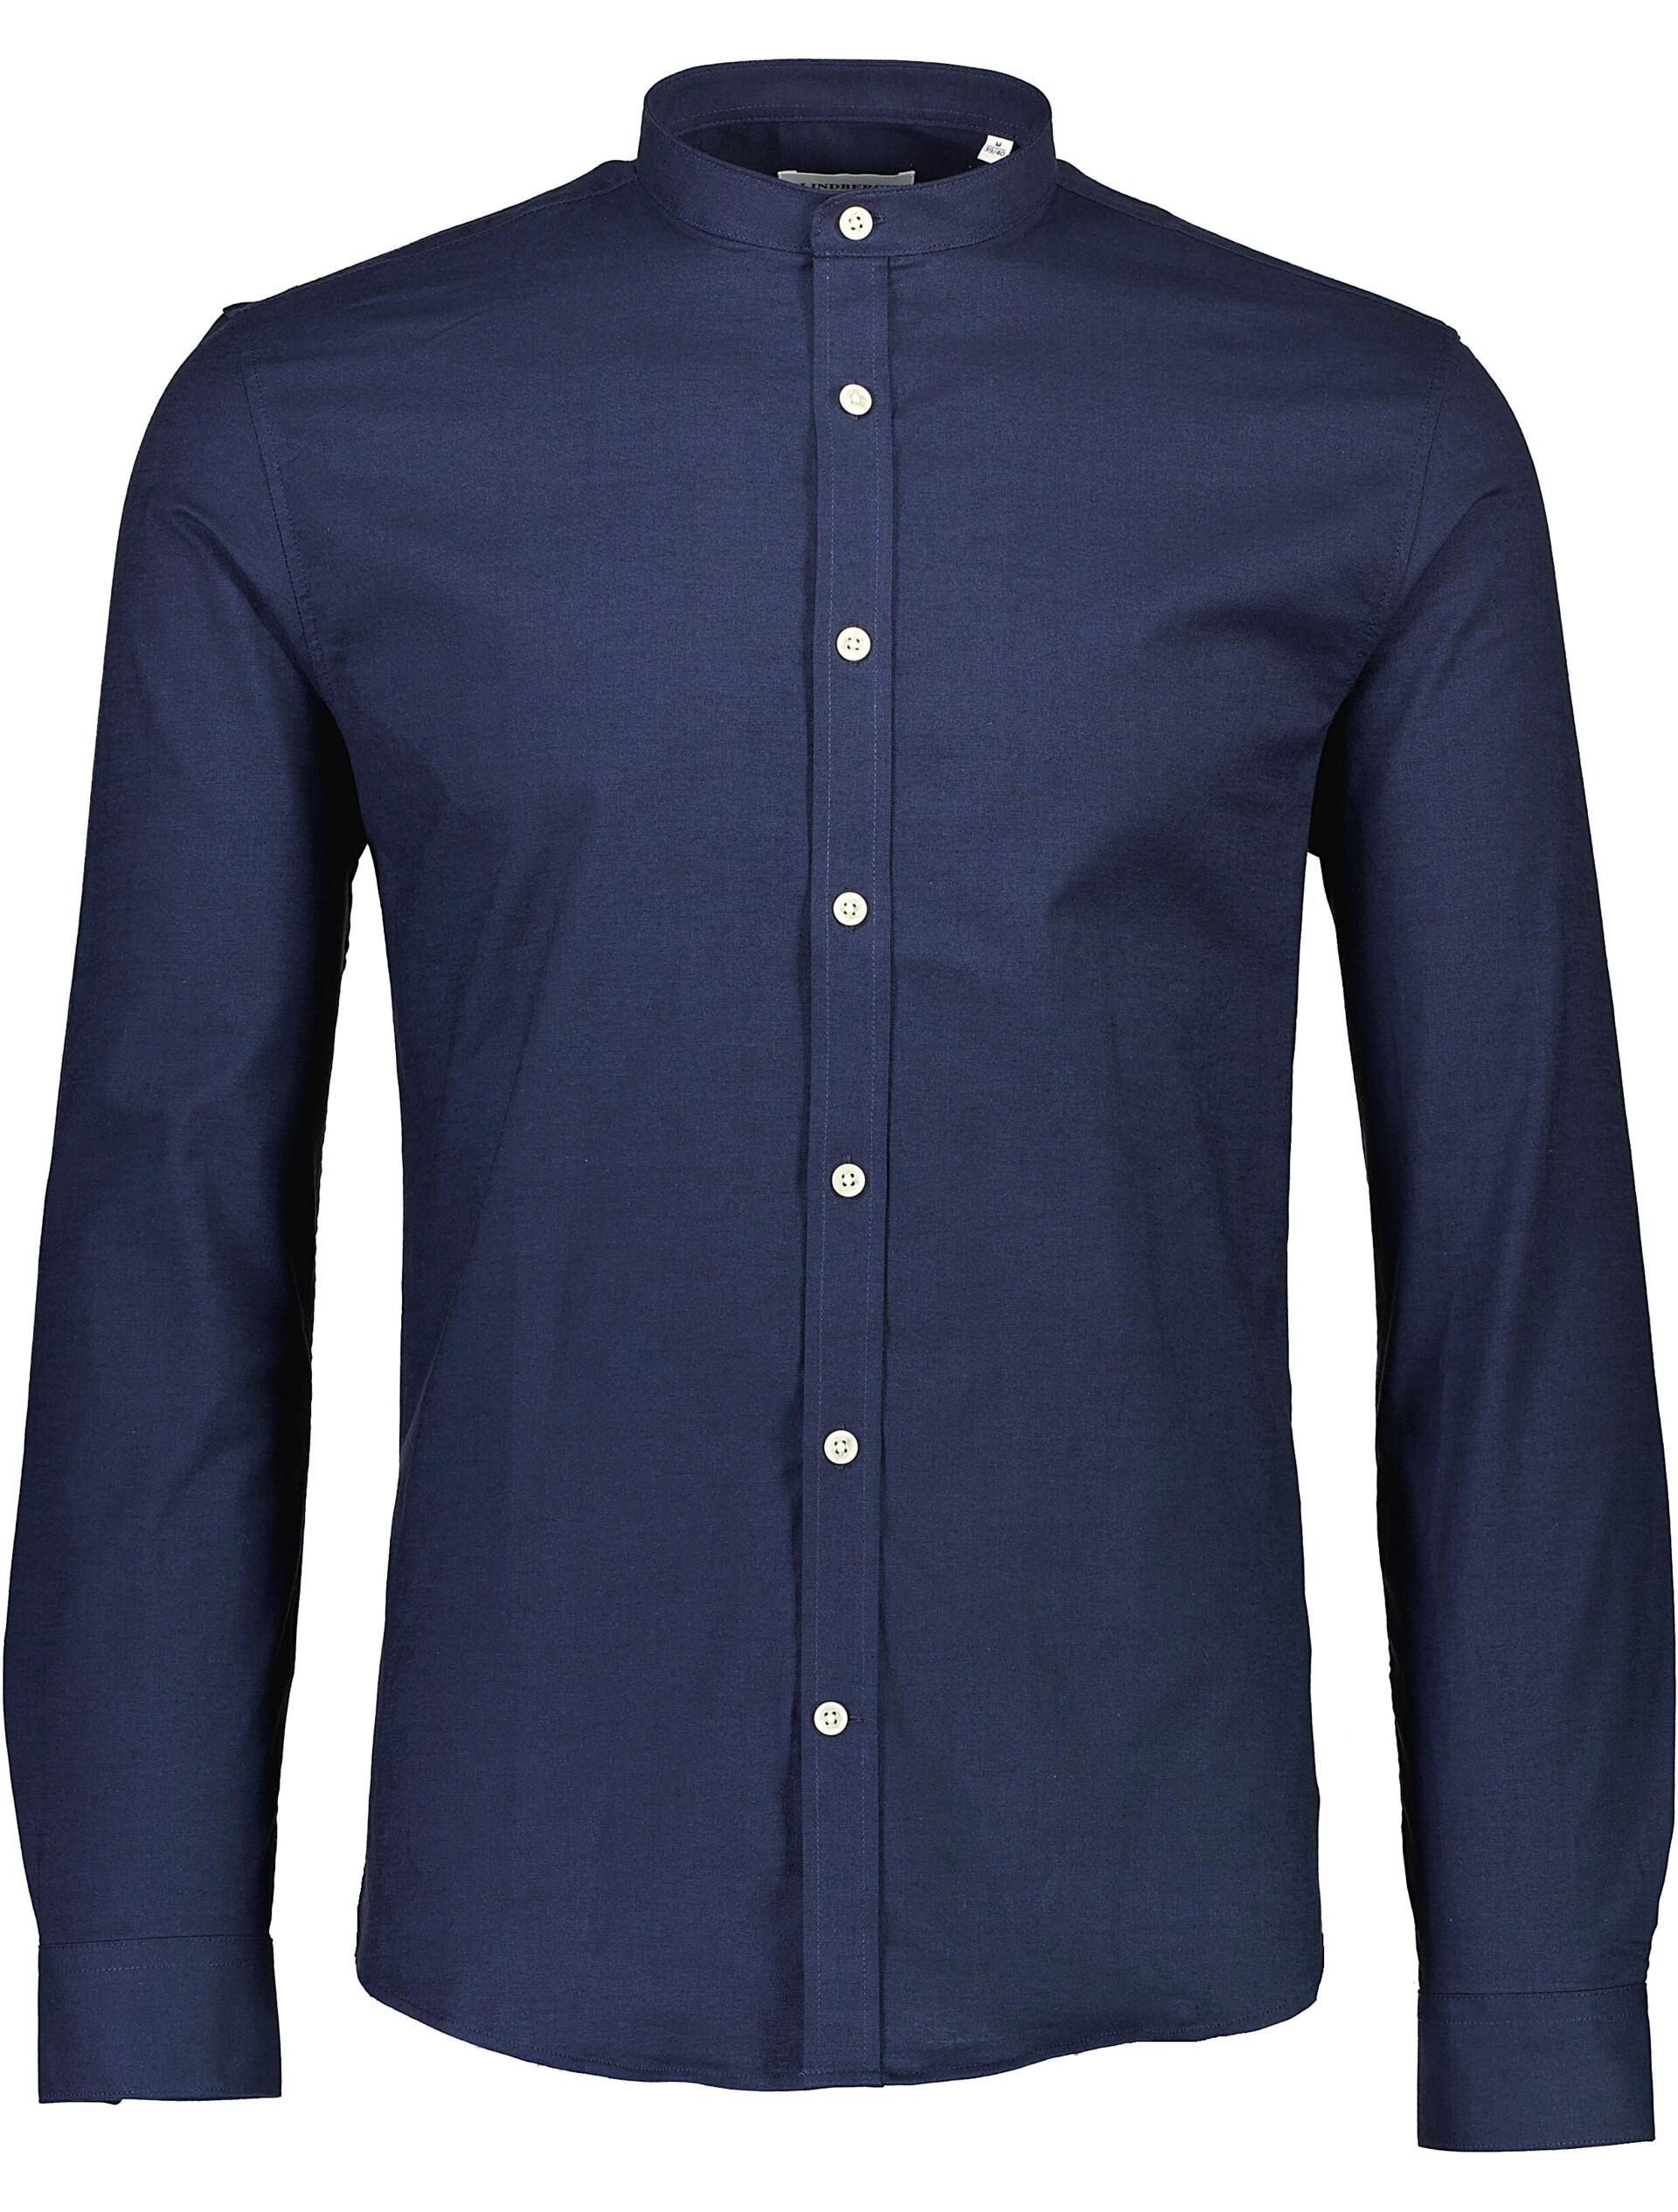 Lindbergh Oxford shirt blue / navy mix